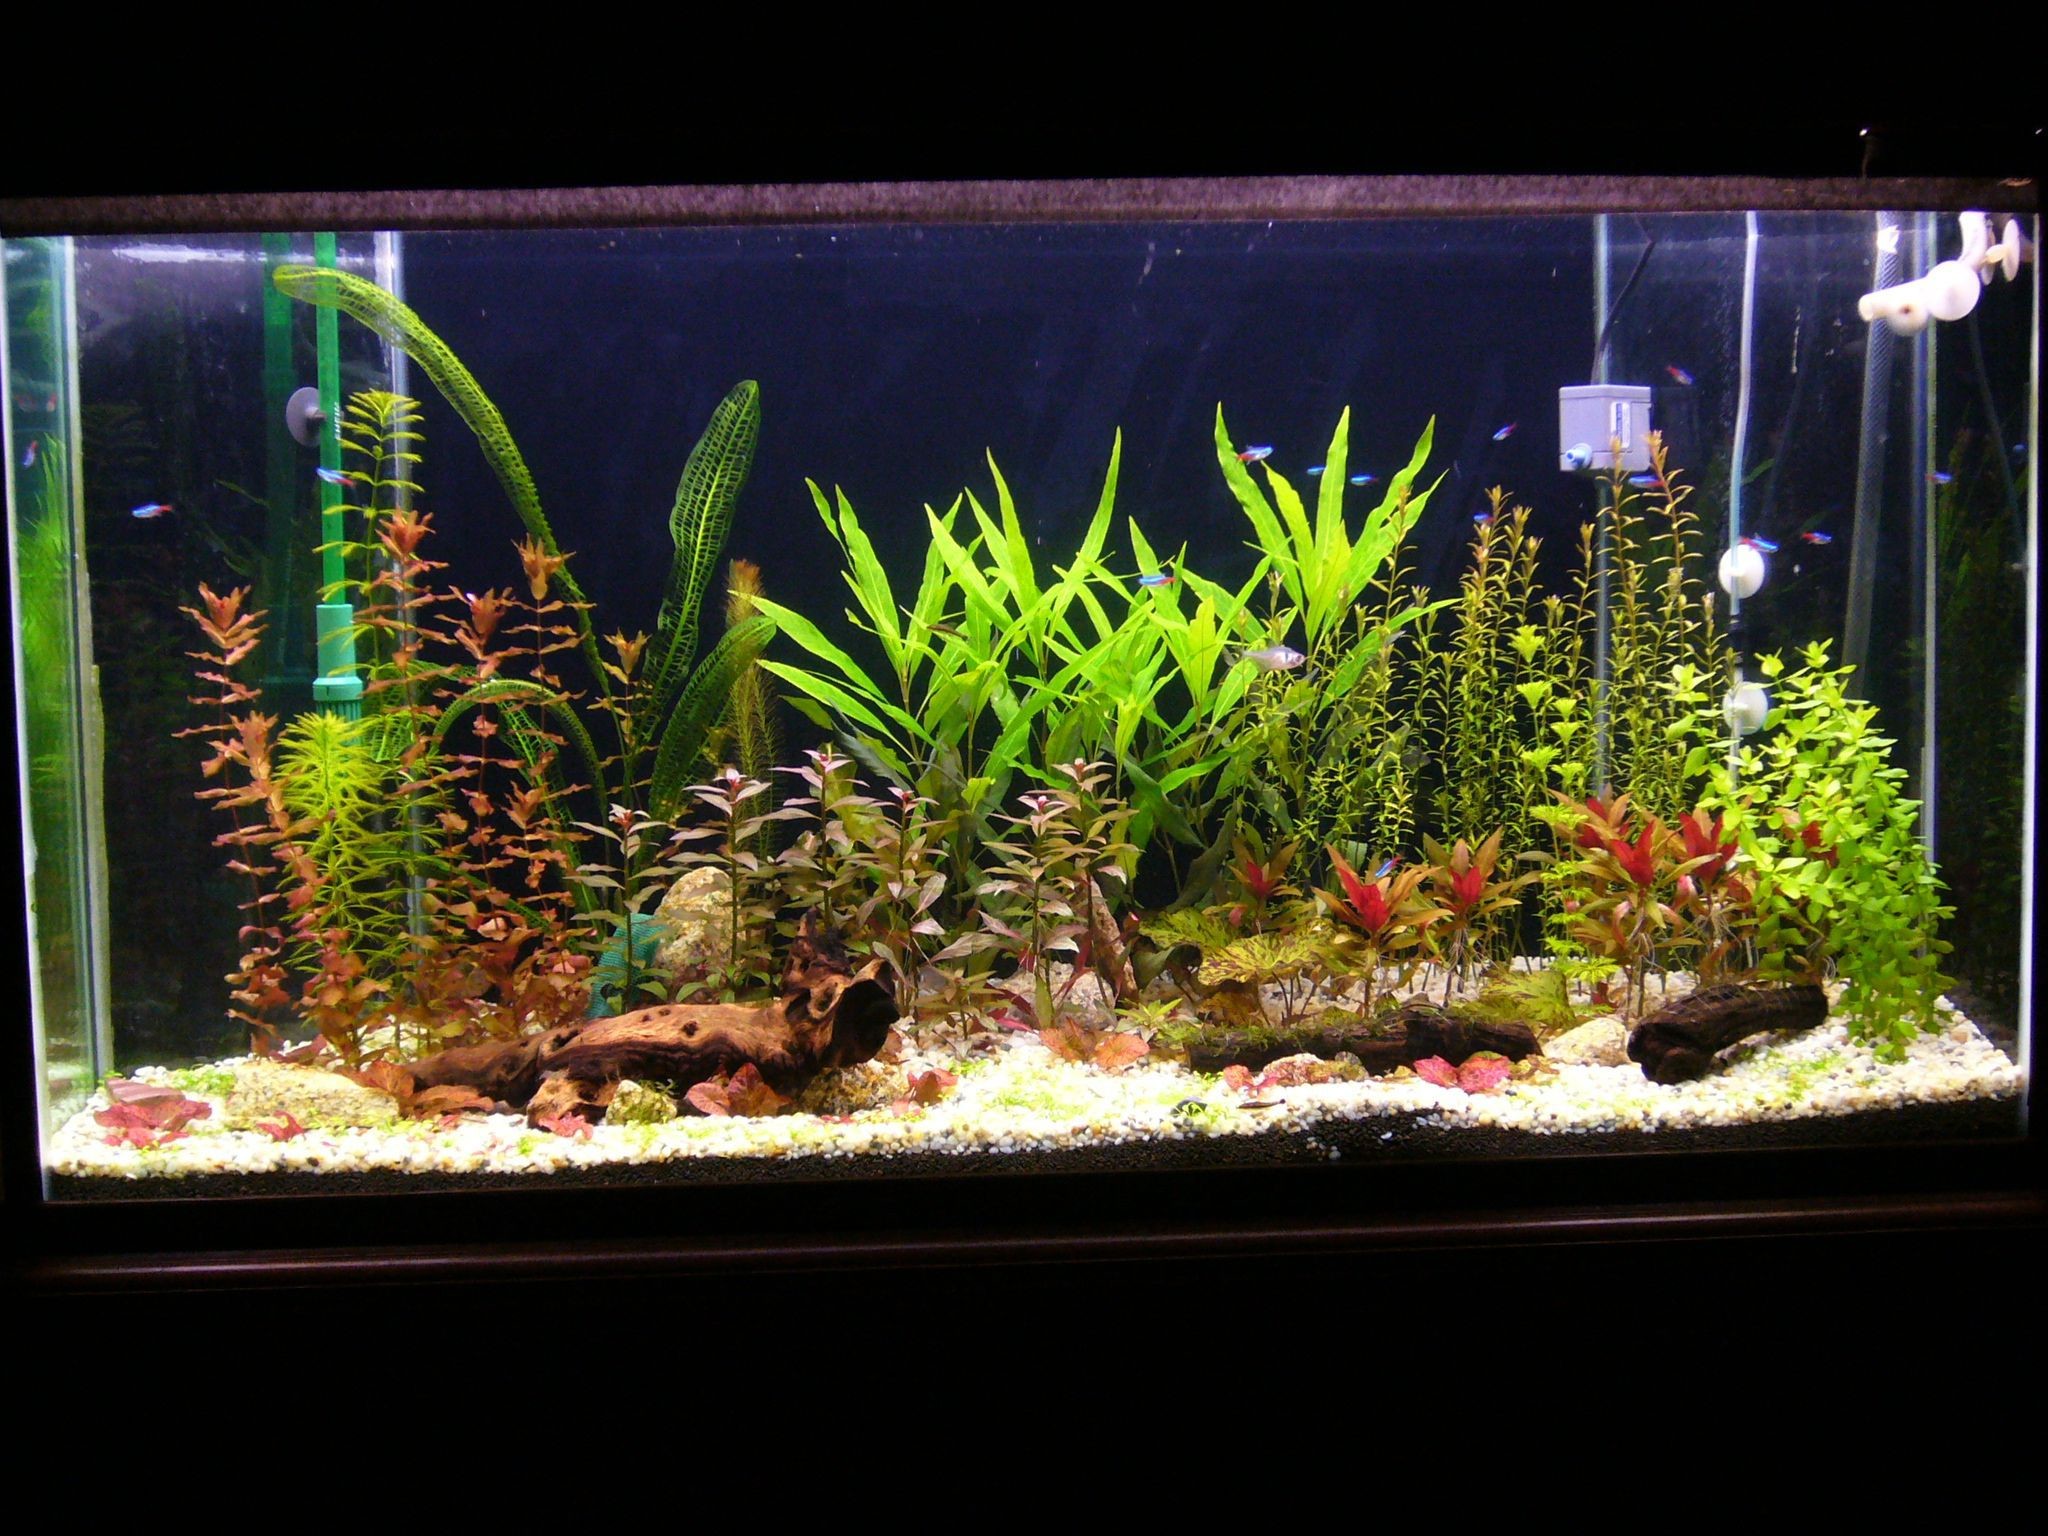 2048x1536 Full Size of Fish Tank Live Planted Aquarium Cheong Kim Tick Live Wallpaper  Fishium For Window10live ...